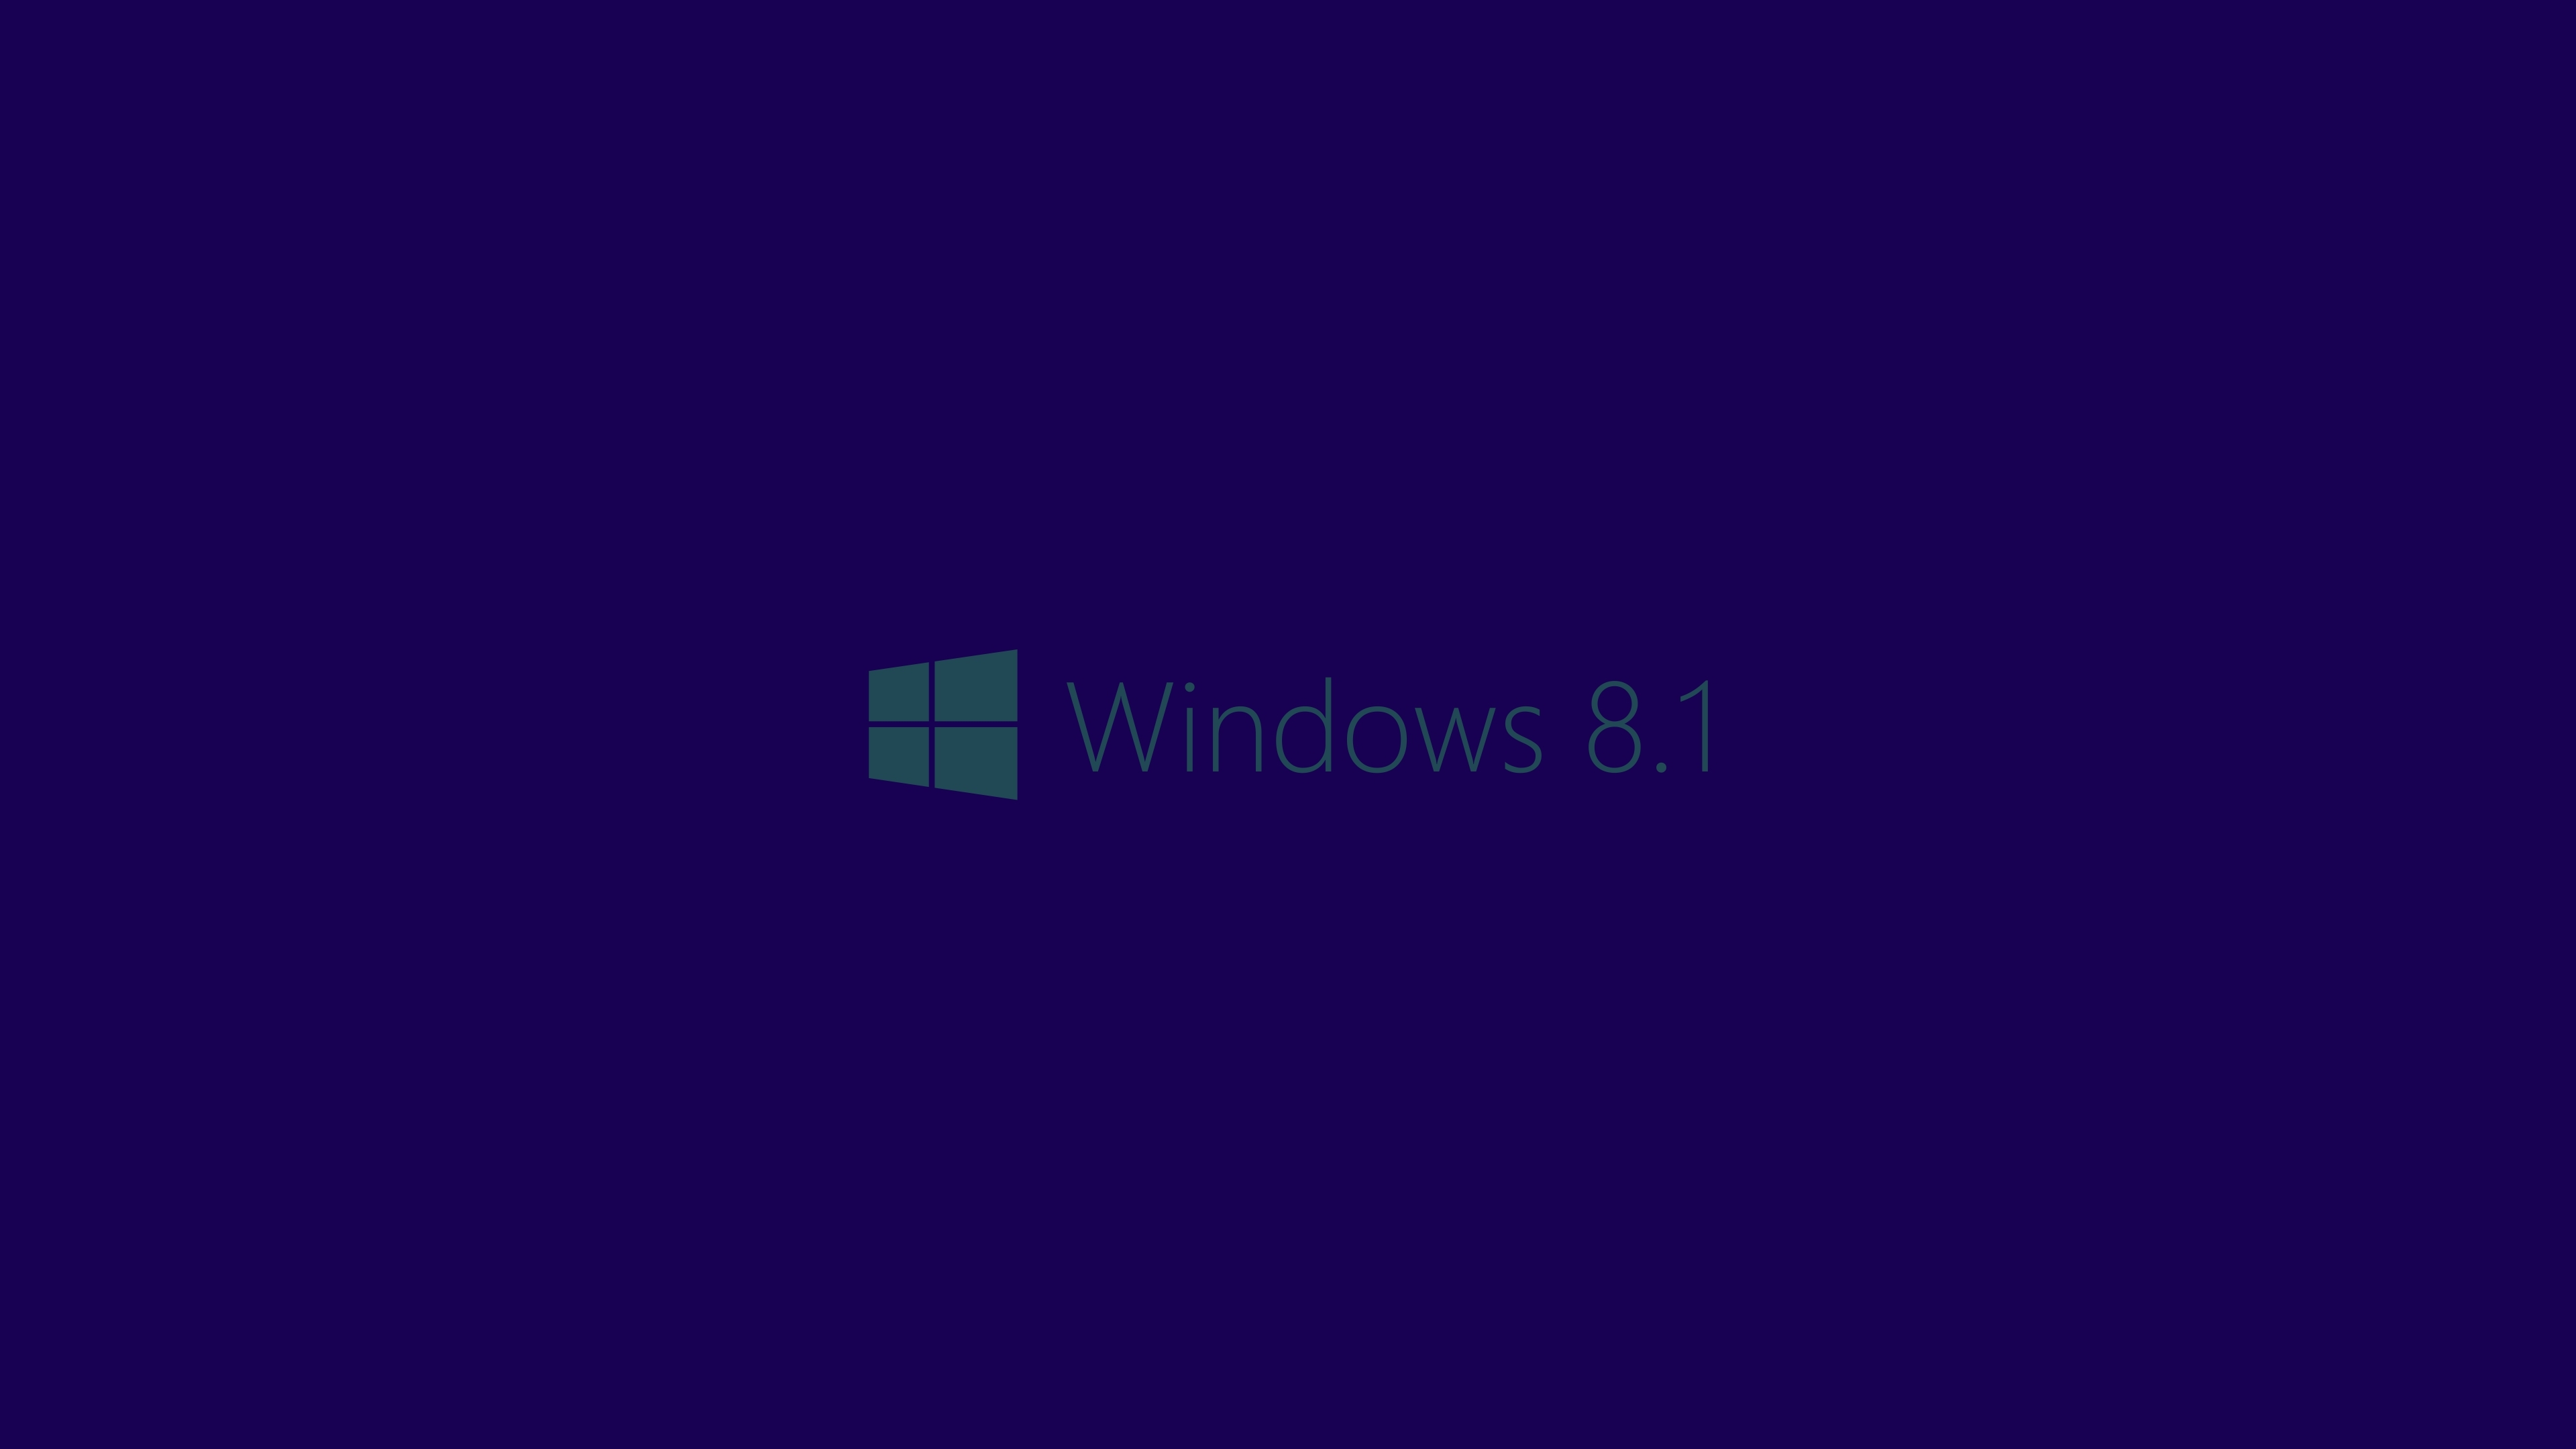 windows 8.1 wallpaper,blue,violet,black,purple,cobalt blue